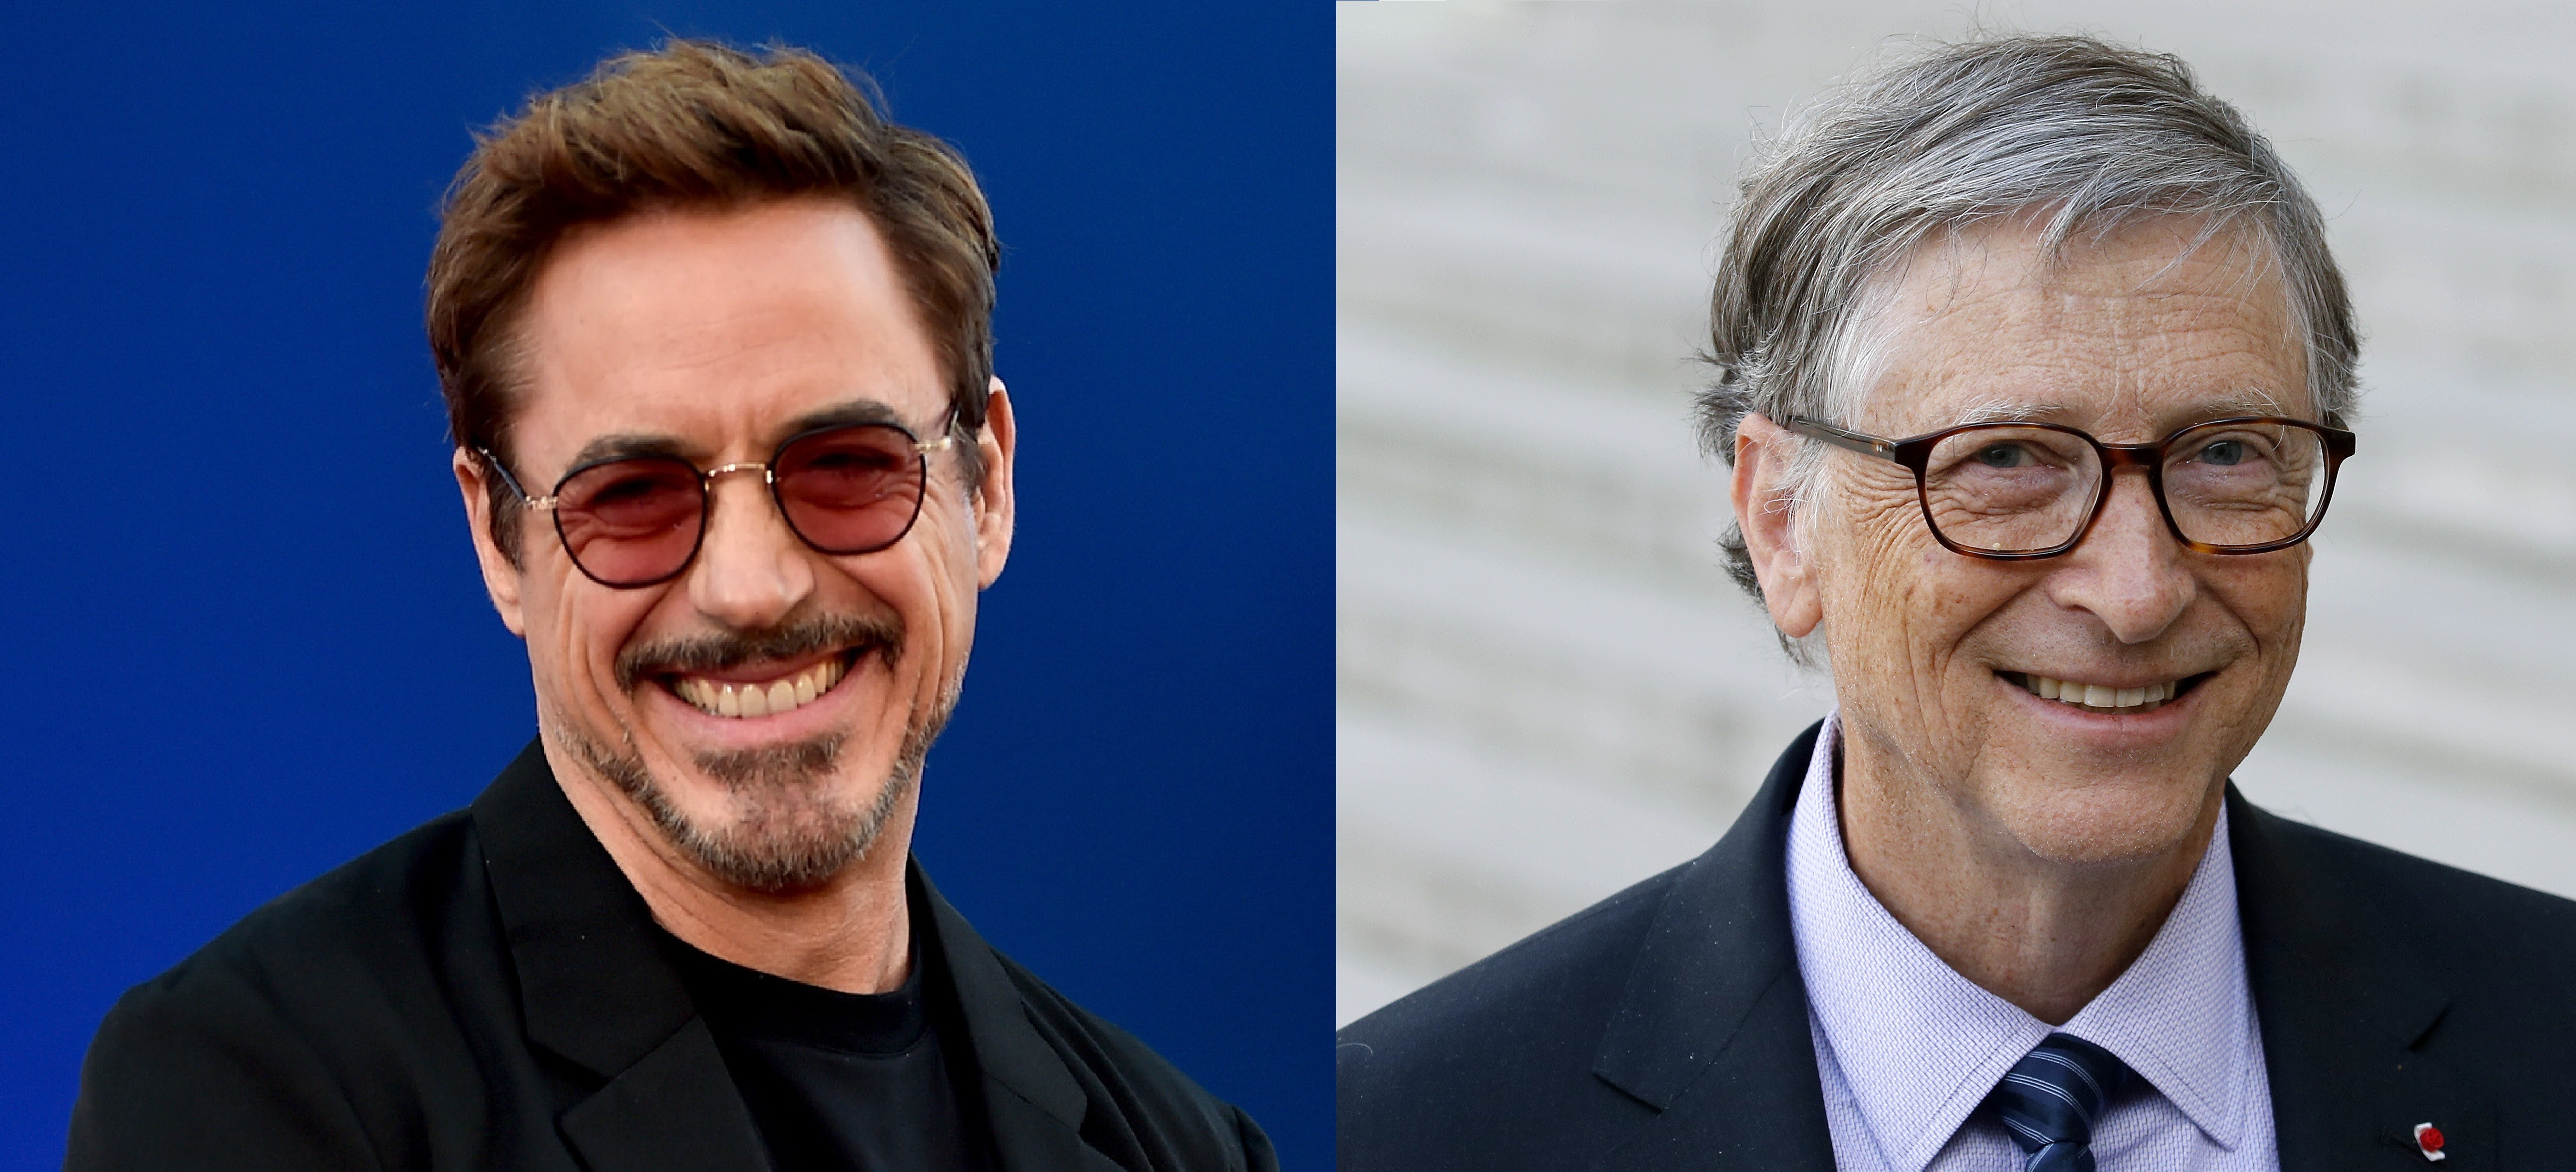 Turntide recebeu investimentos de Robert Downey Jr. (dir.) e Bill Gates (esq.)  (Foto: Alberto E. Rodriguez/Getty Images;Chesnot/Getty Images)